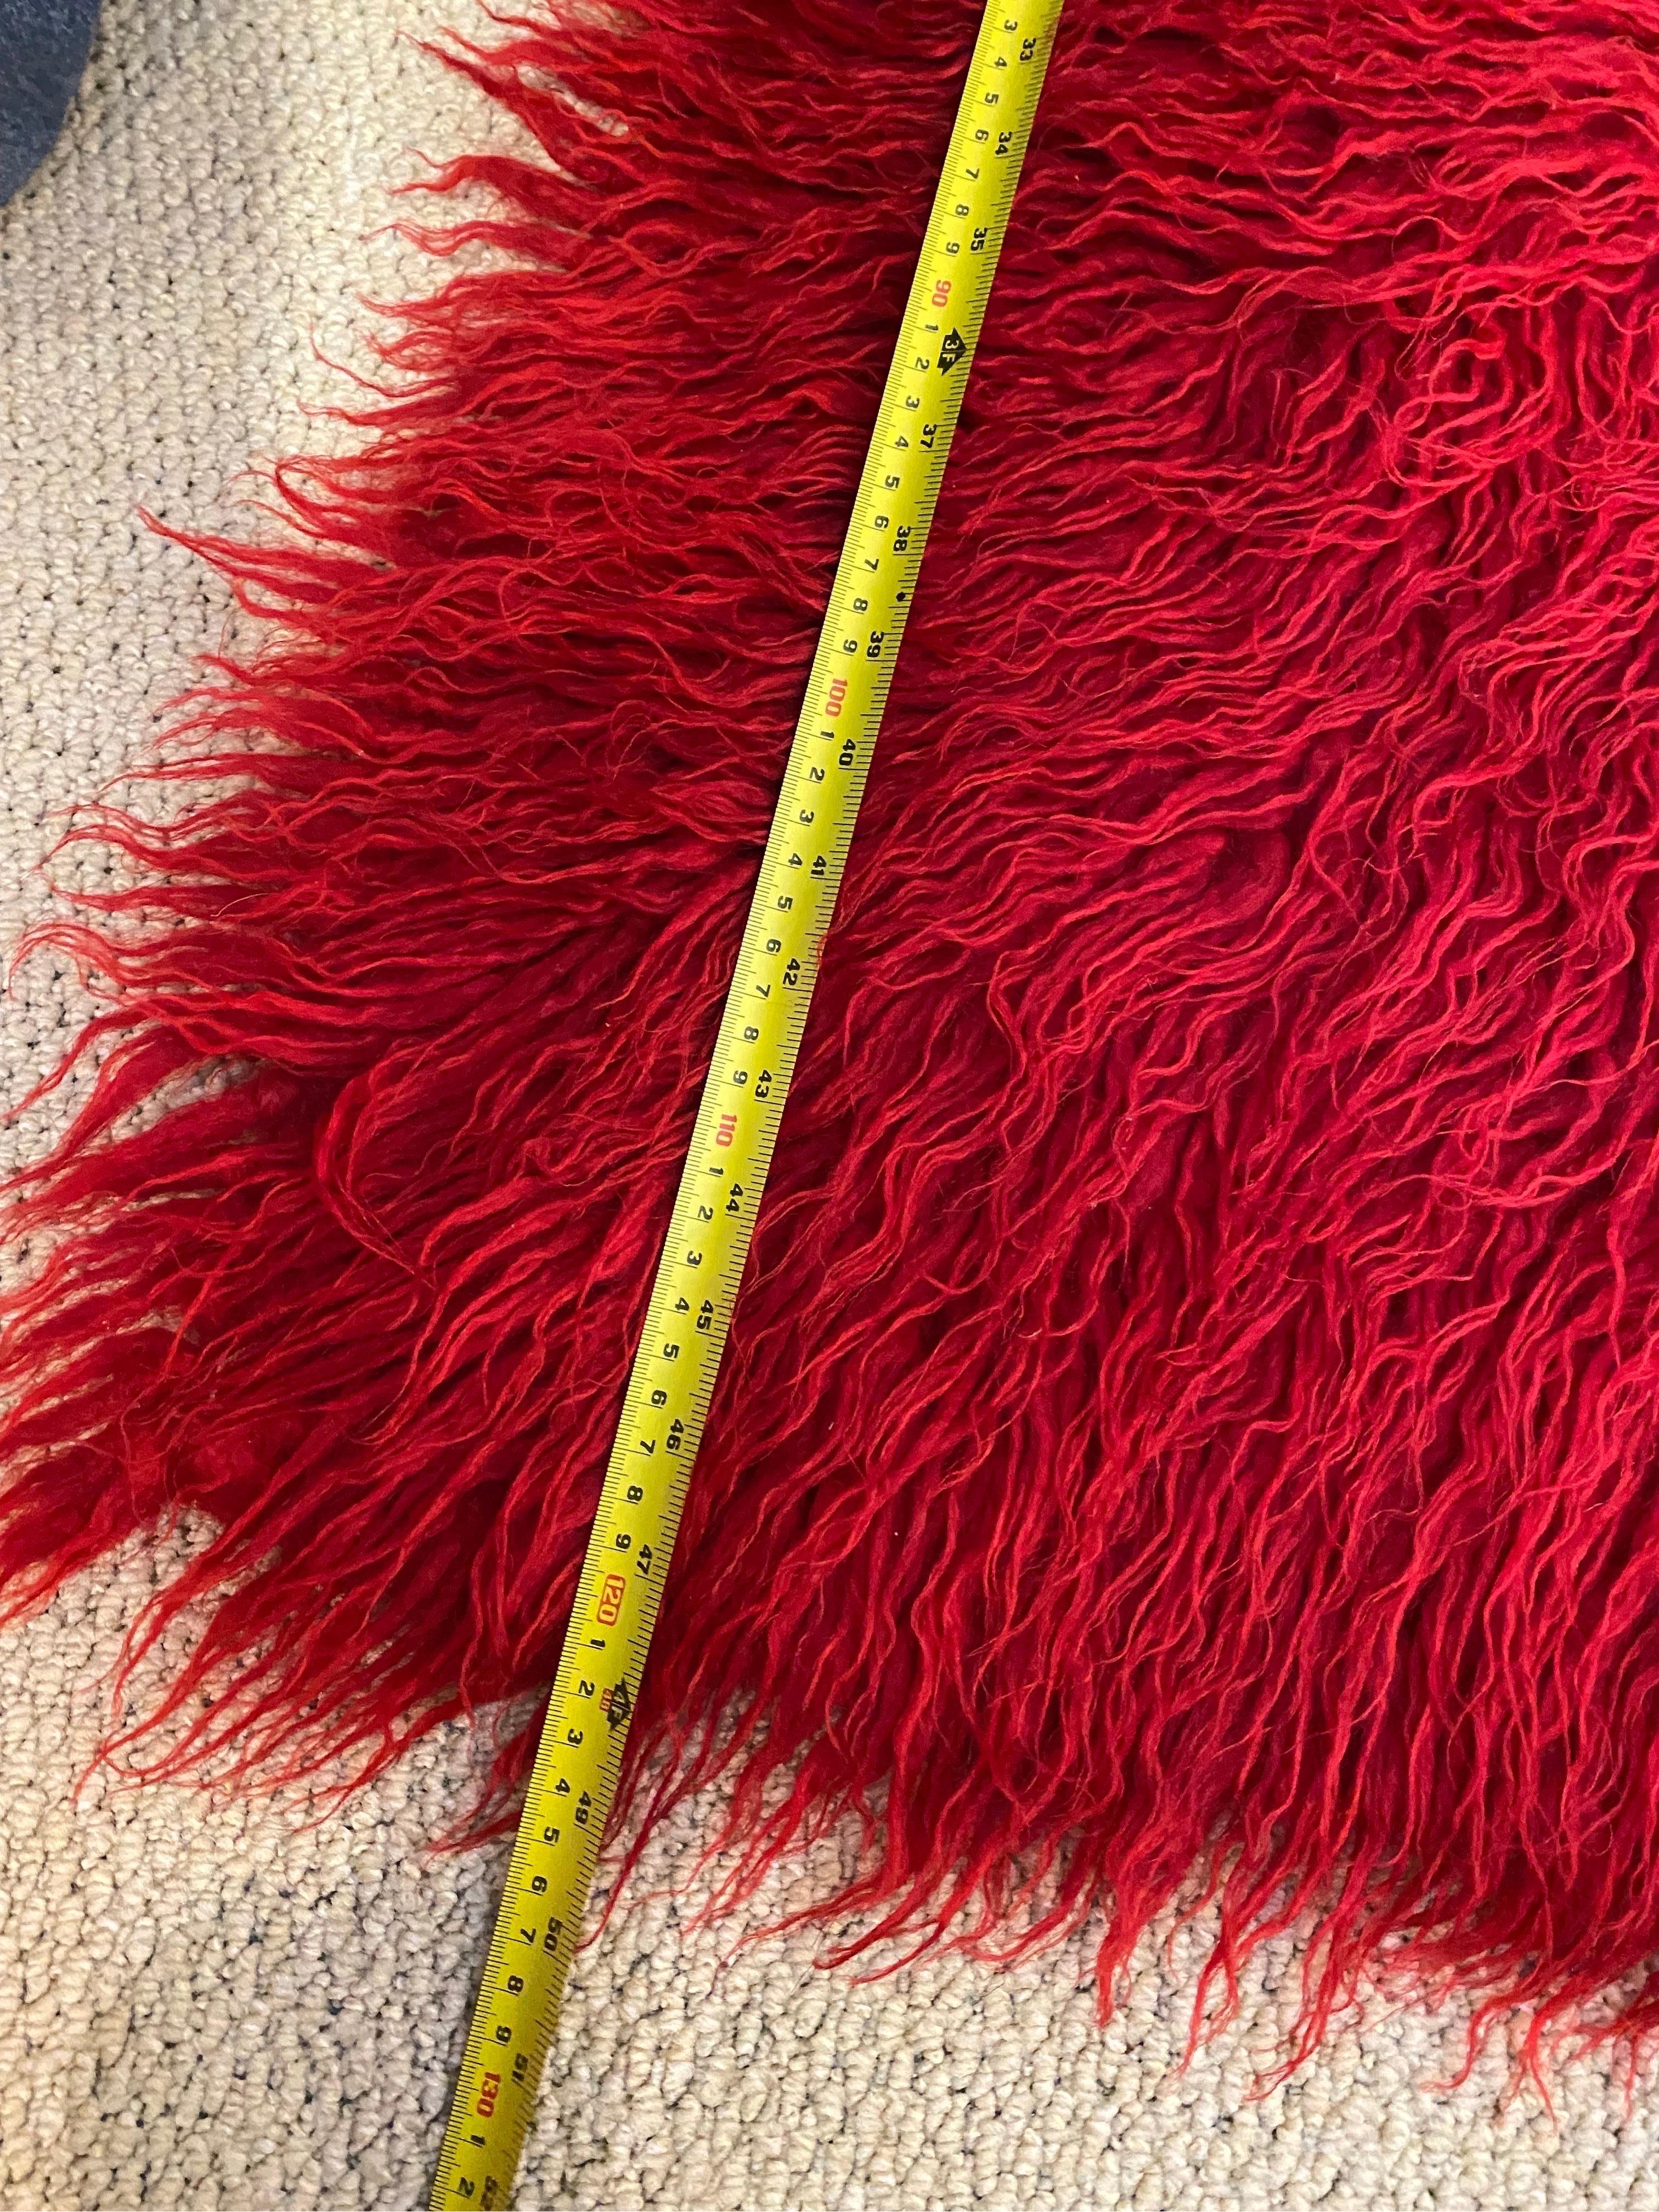 1960s Wool Handwoven Red Rug Vintage Retro Folk Art Carpet Throw  For Sale 3